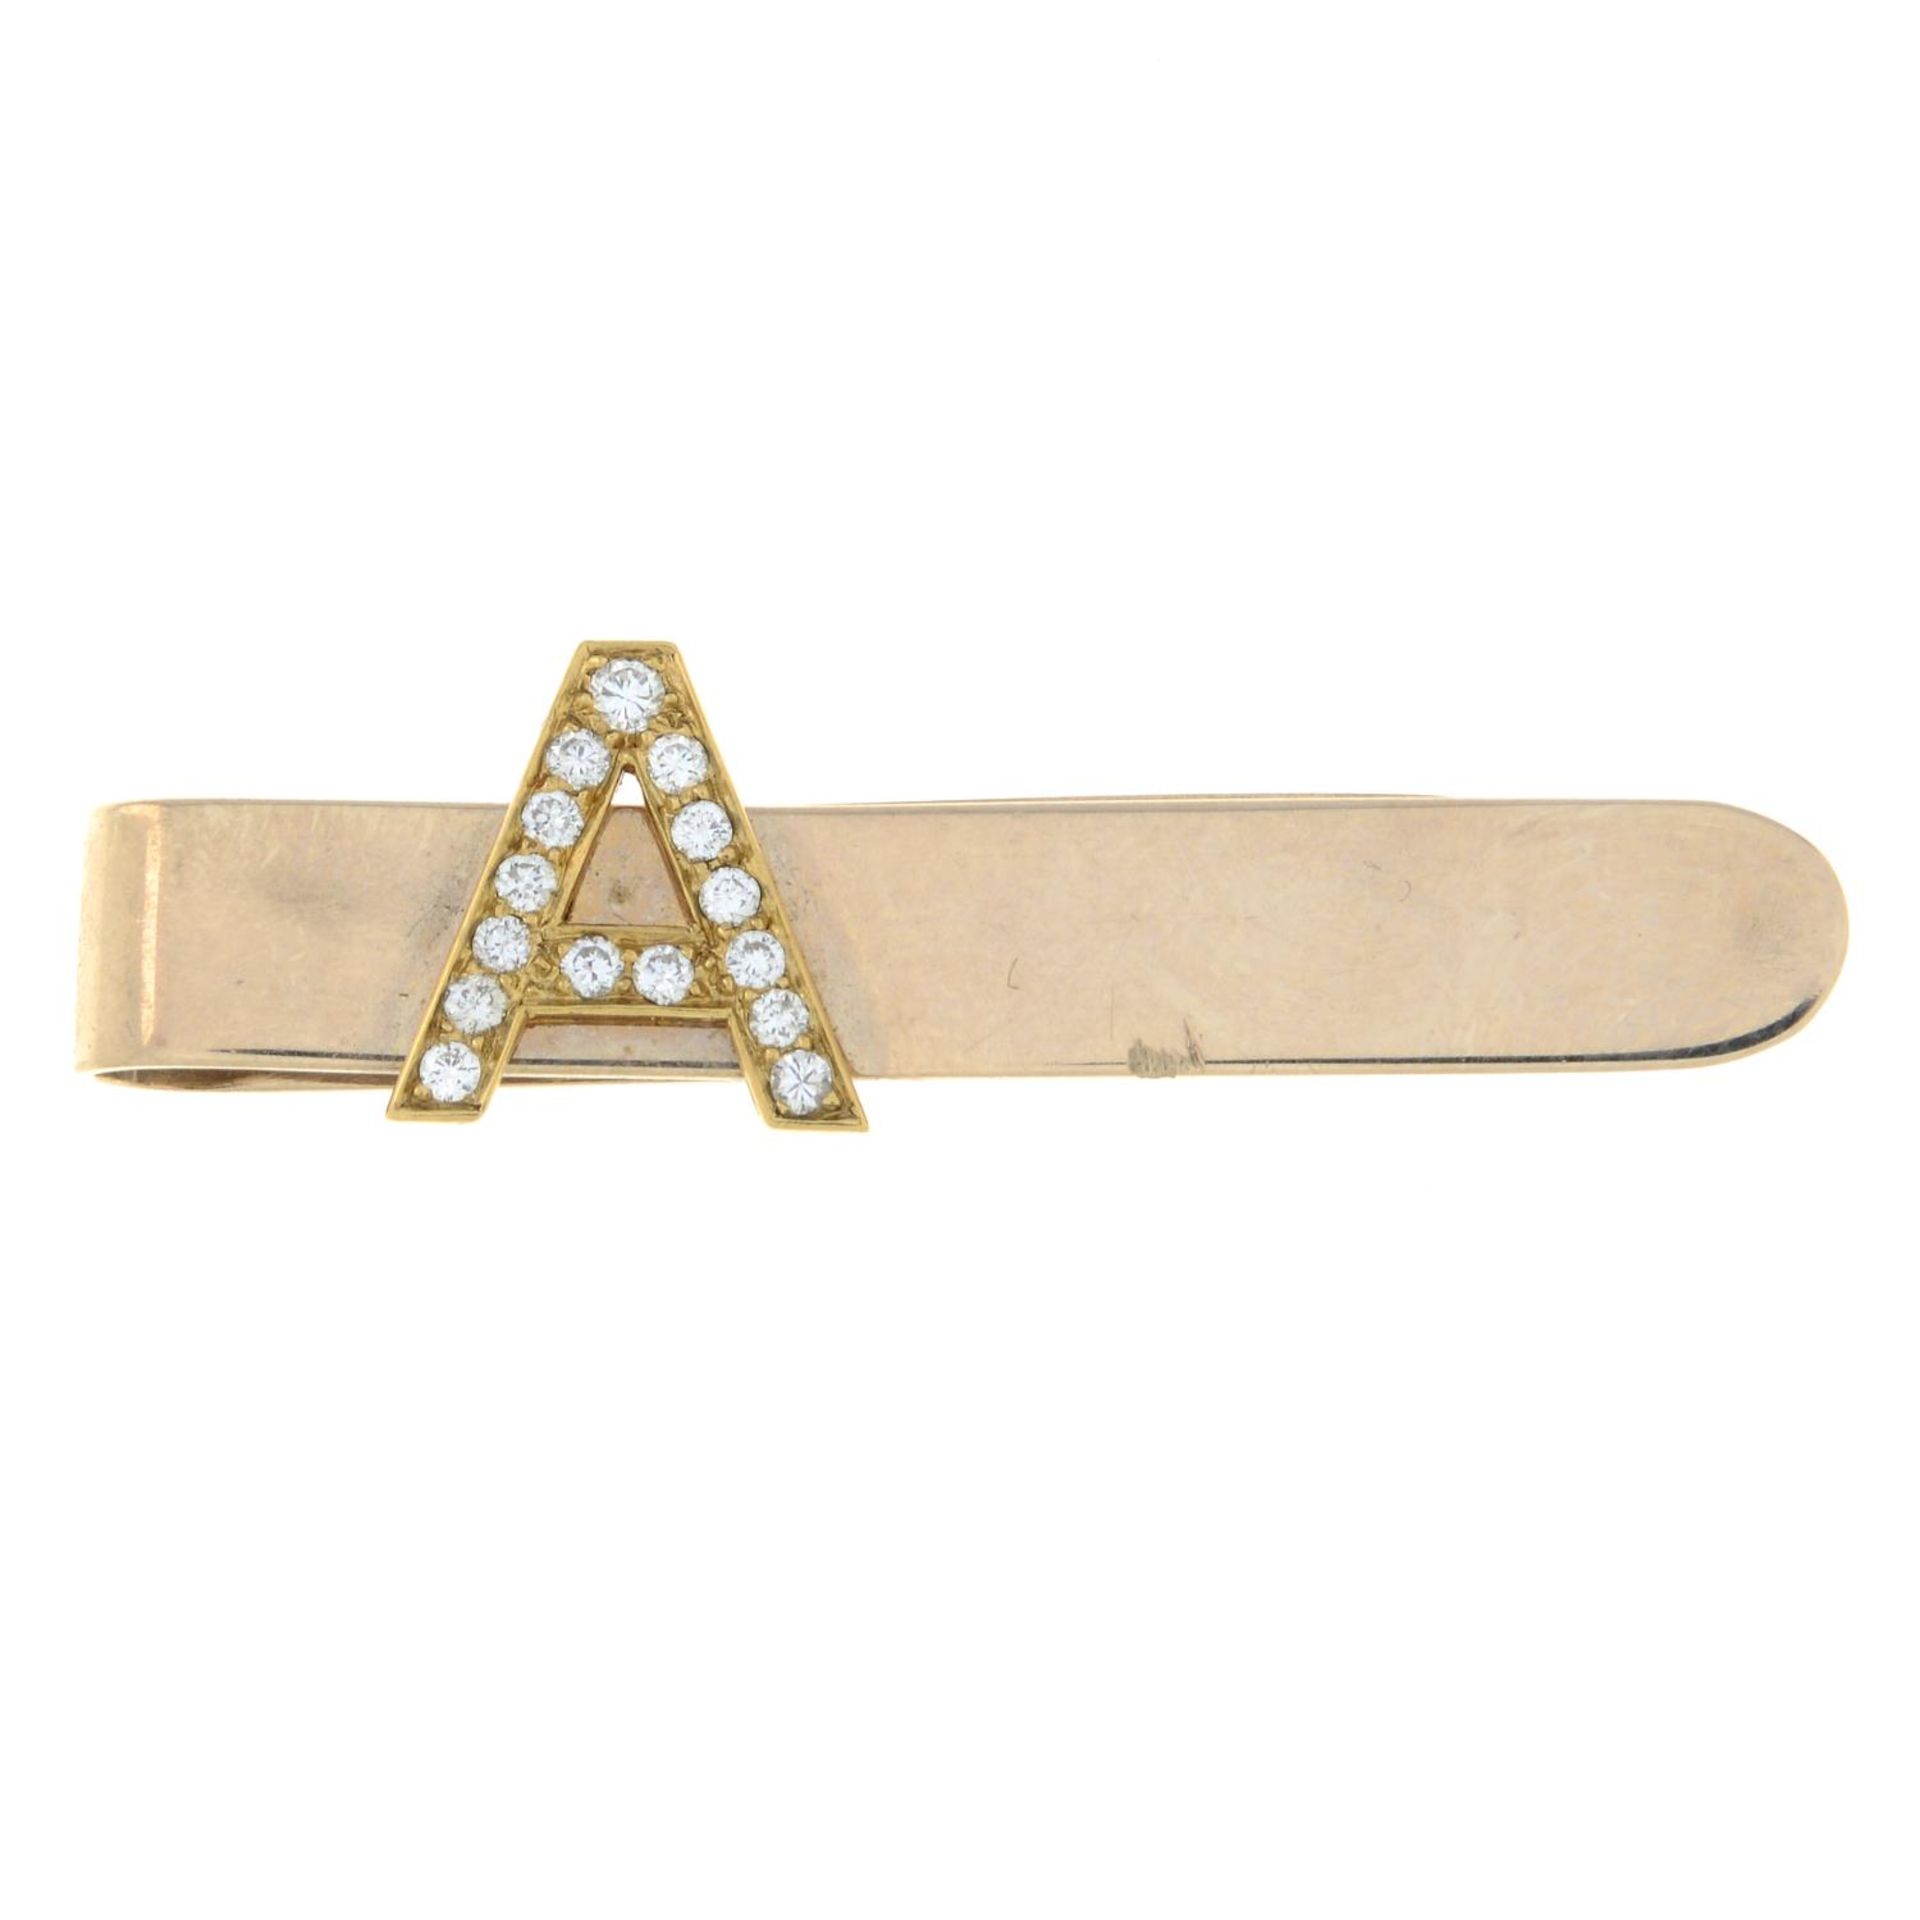 A diamond initial 'A' tie slide.